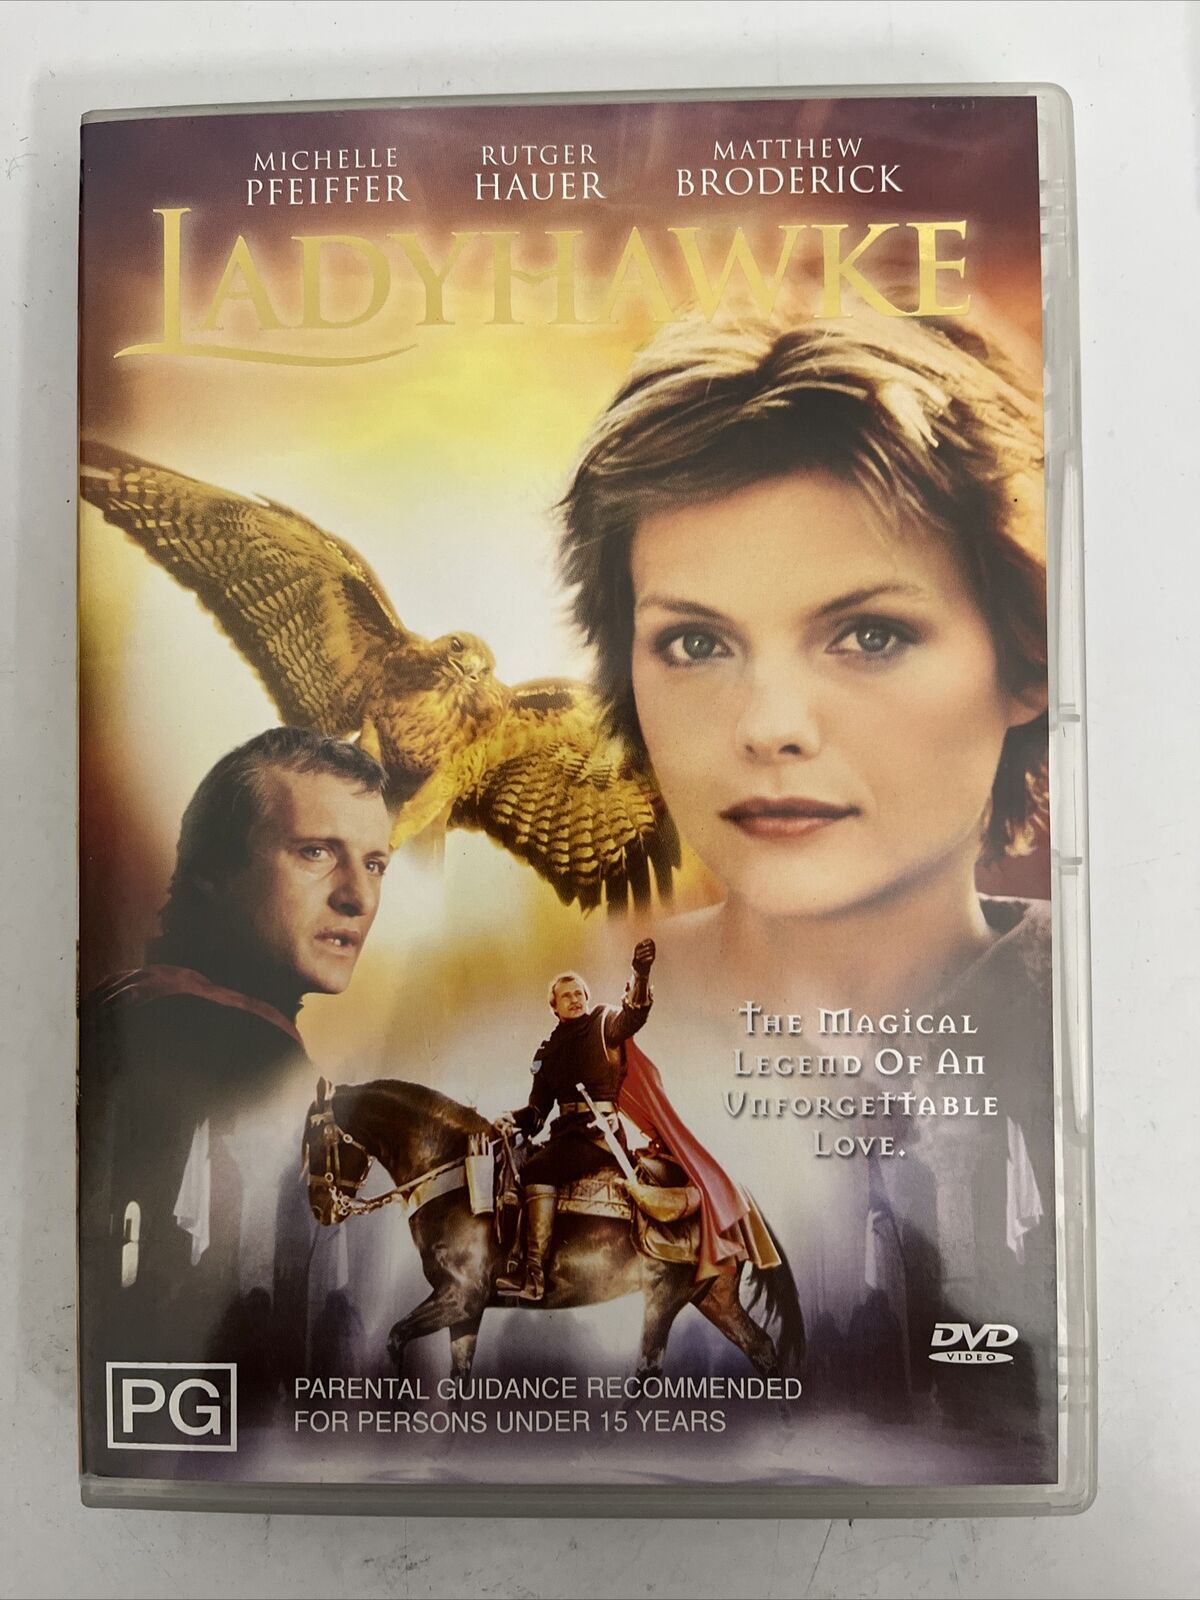 Ladyhawke (DVD, 1985) NEW Matthew Broderick, Michelle Pfeiffer. Region 4